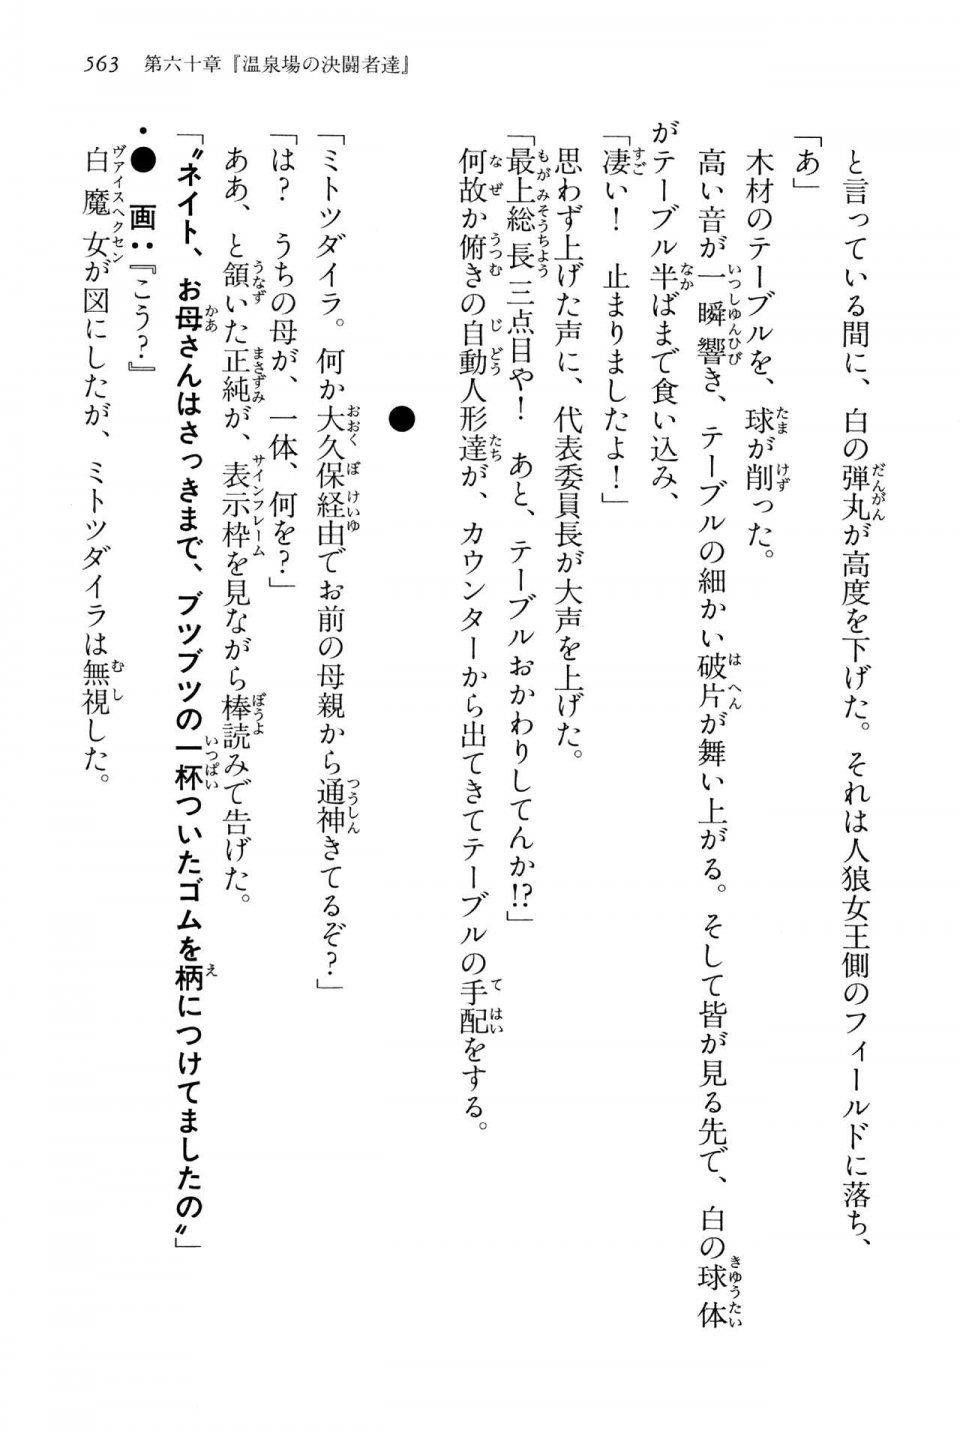 Kyoukai Senjou no Horizon LN Vol 15(6C) Part 2 - Photo #33